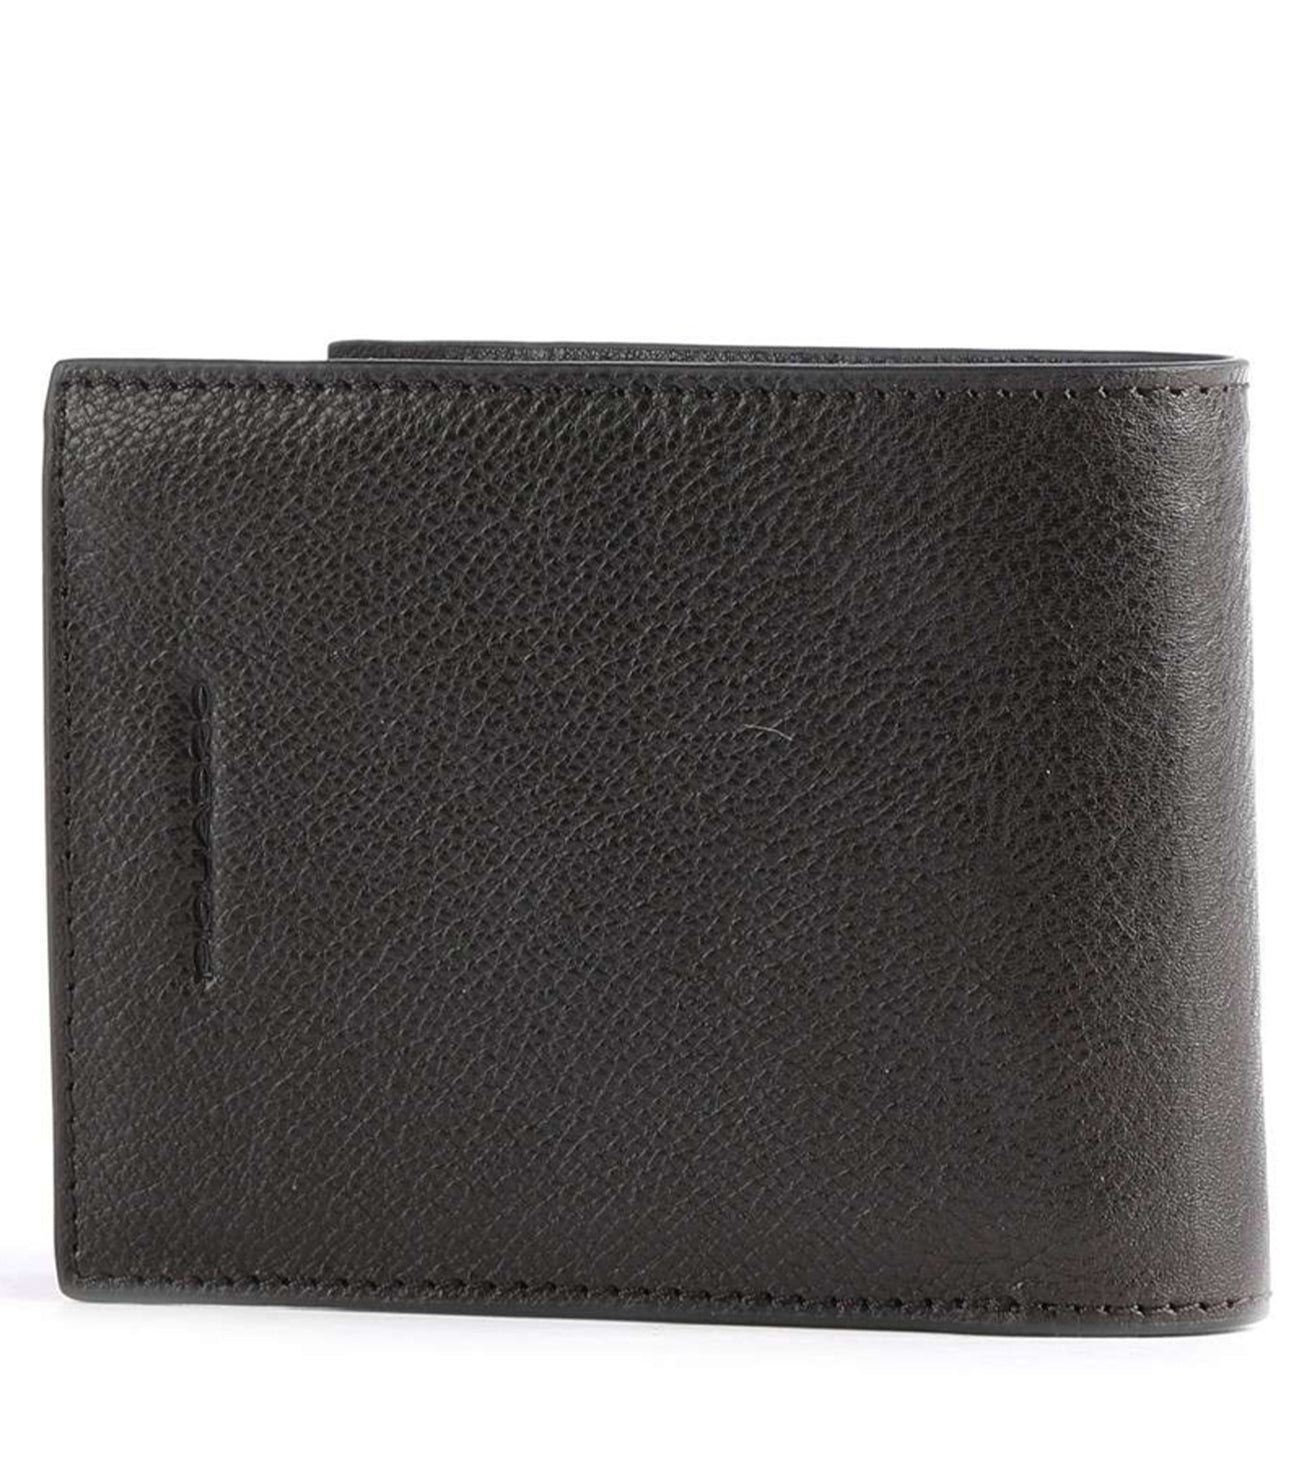 Piquadro Black Square Men's Wallet